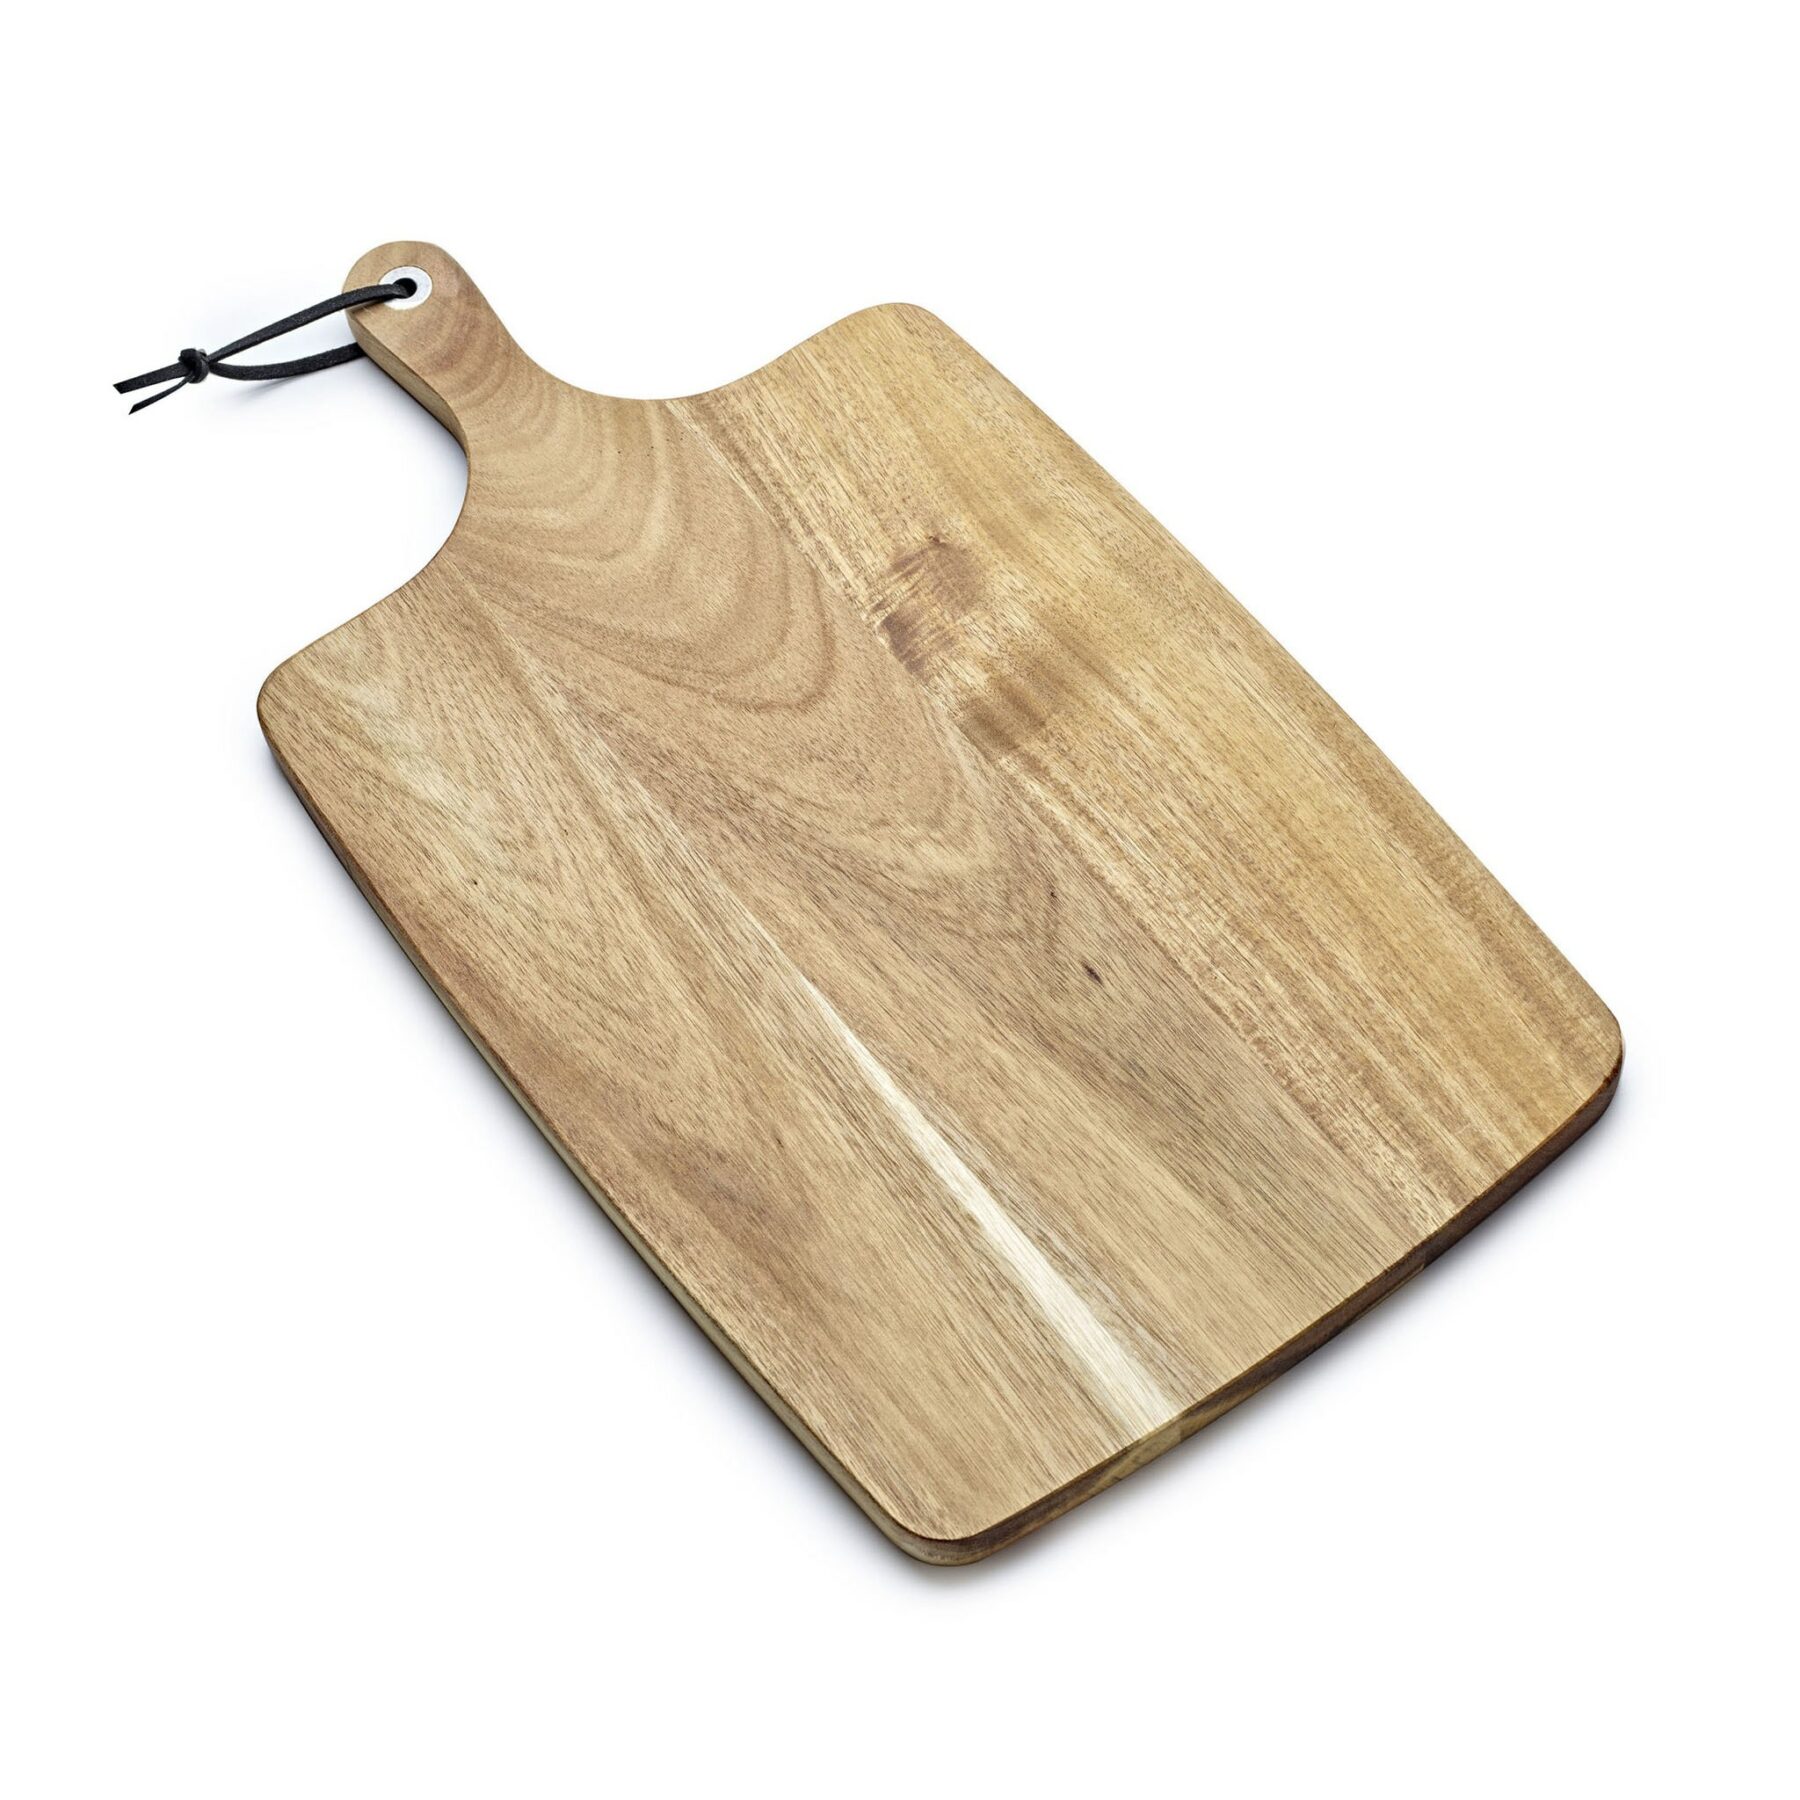 Large Acacia Paddle Board